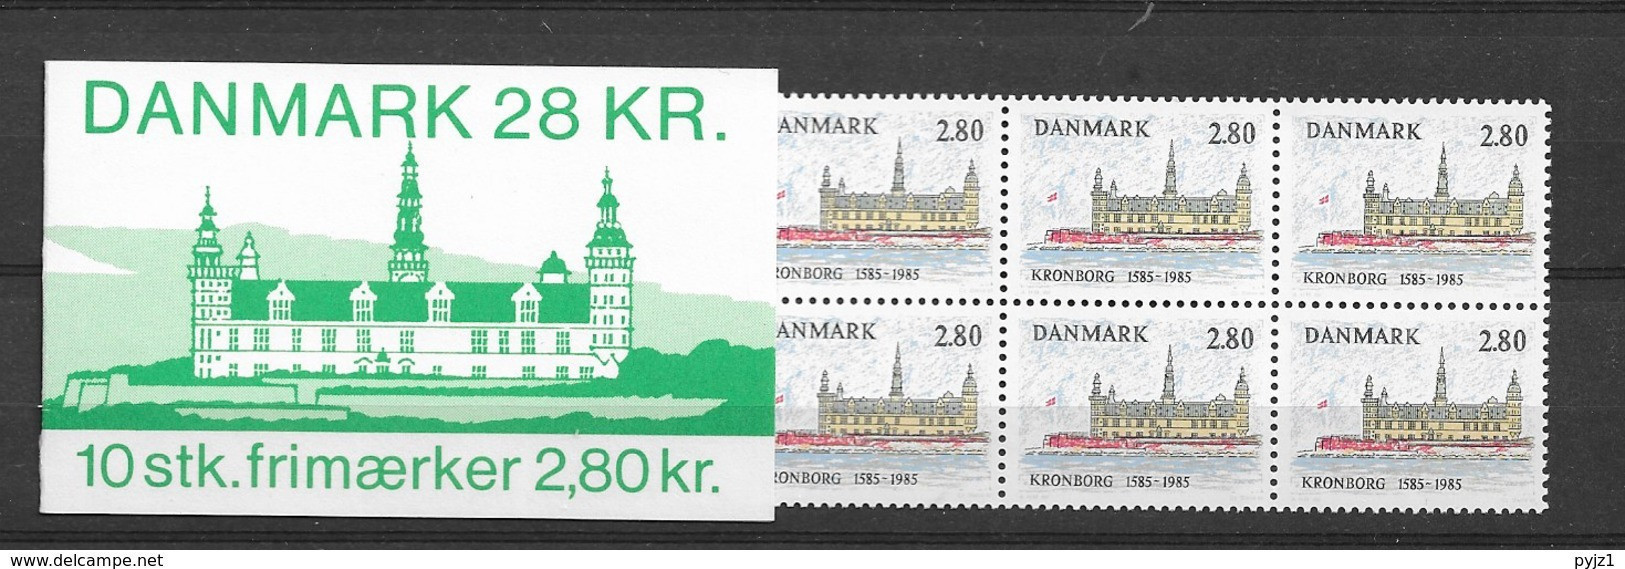 1985 MNH Denmark S39 - Carnets